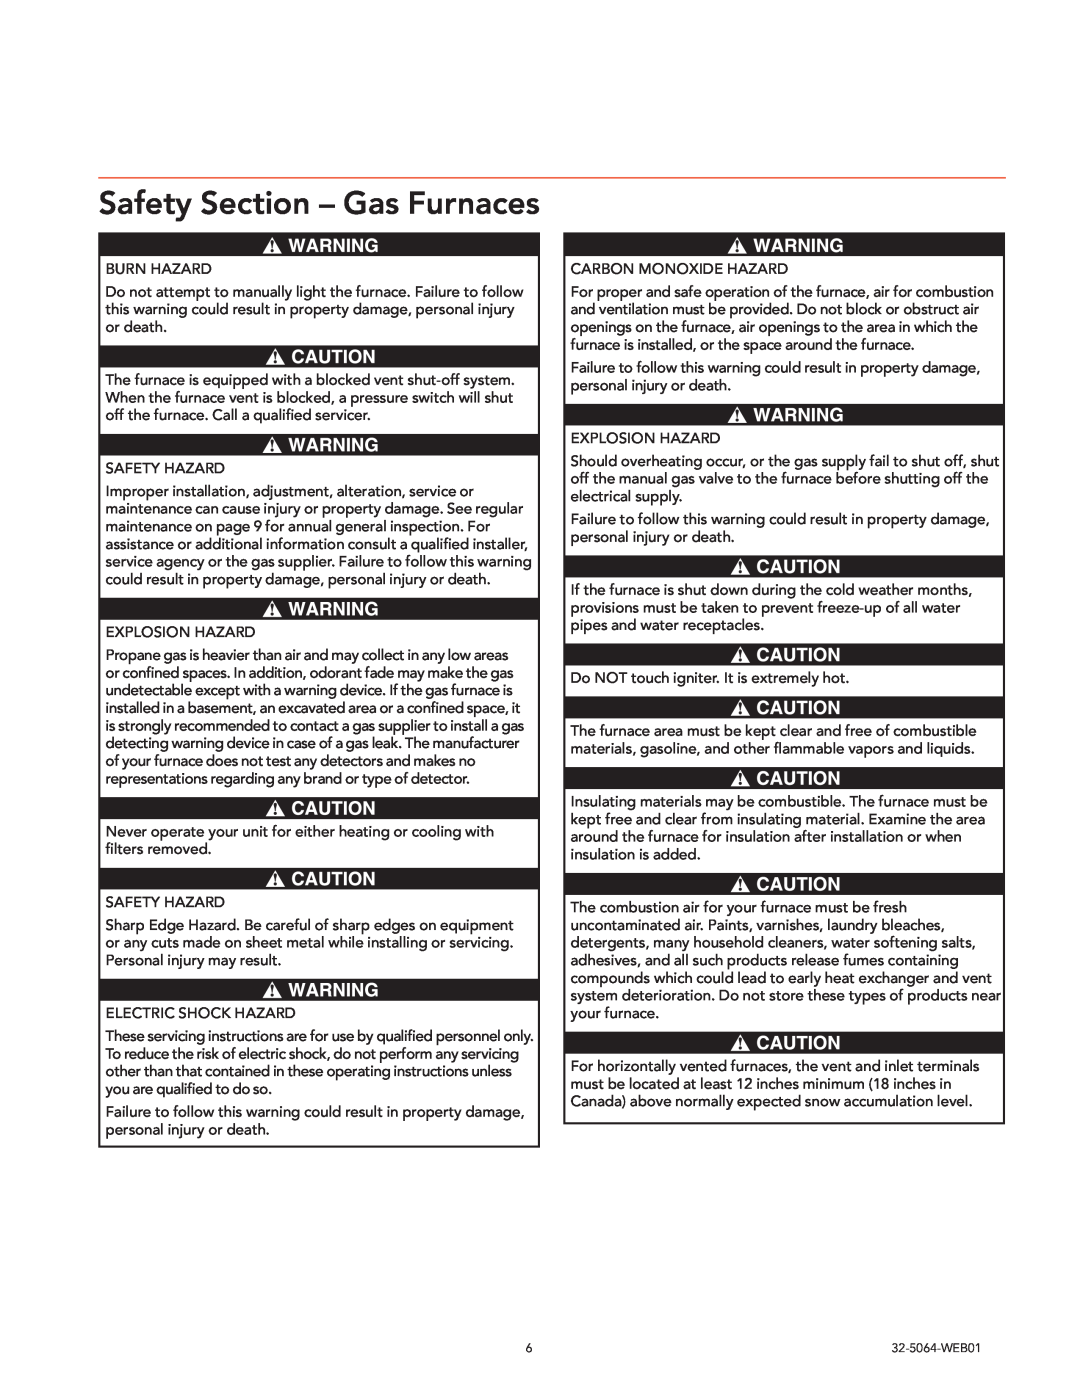 Trane 32-5064-WEB01, Air Handlers Gas Furnaces manual Safety Section - Gas Furnaces, Burn Hazard 